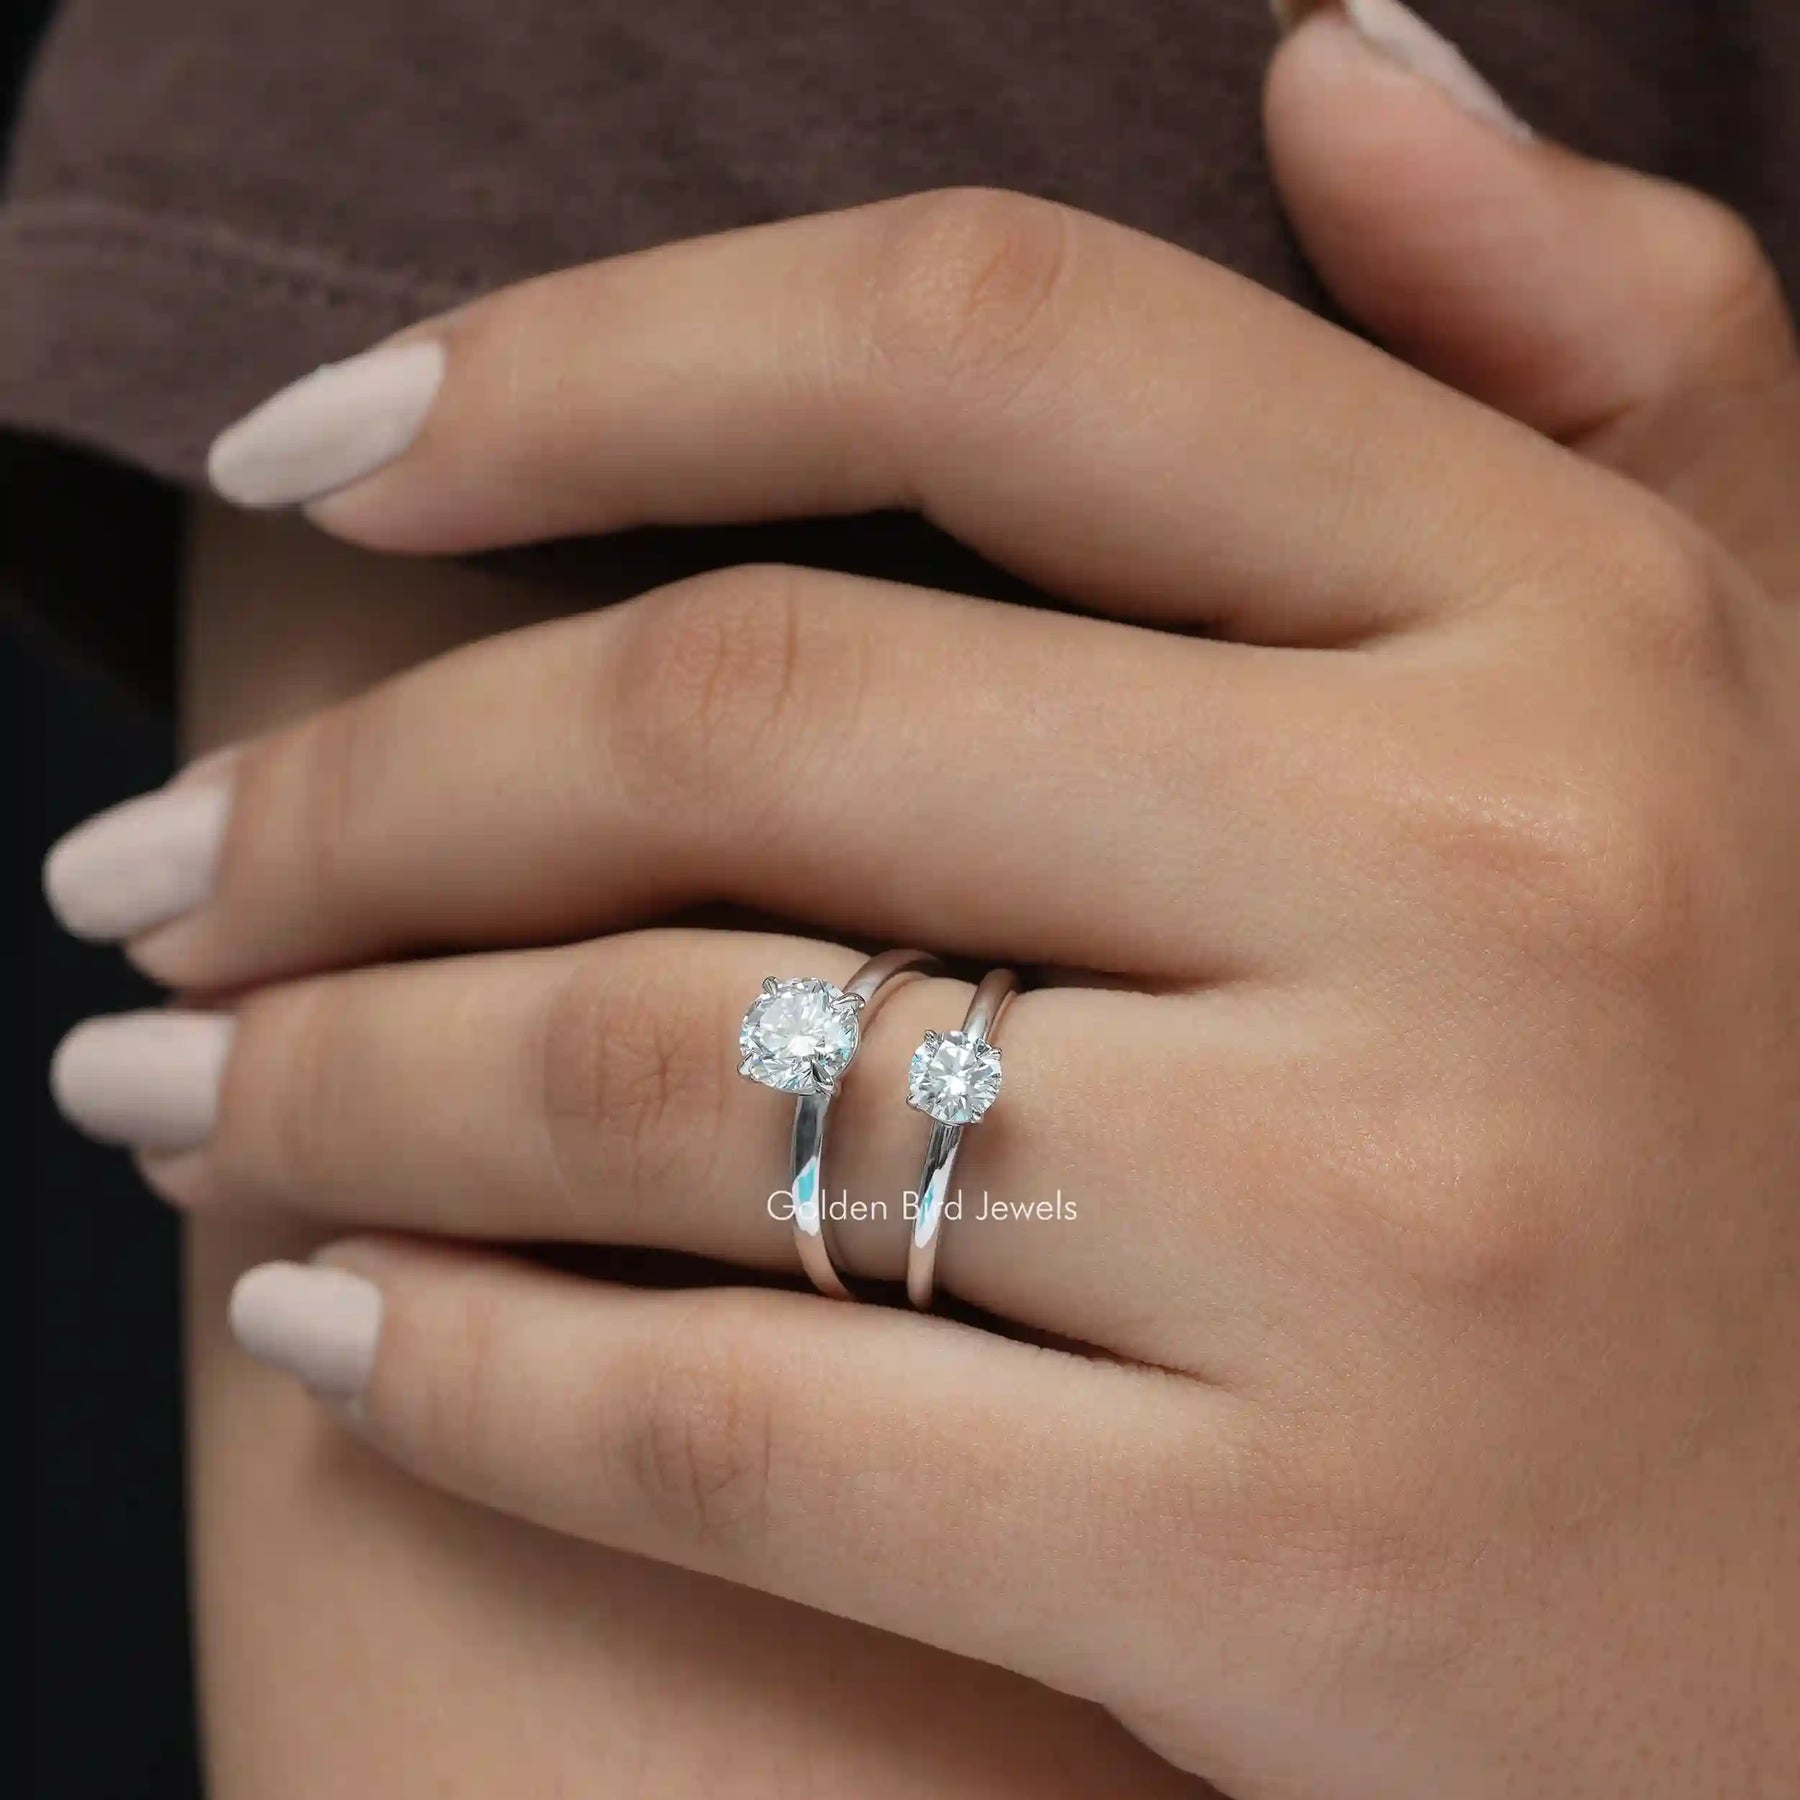 [Round Cut Diamond Engagement Ring Set In Prongs]-[Golden Bird Jwels]